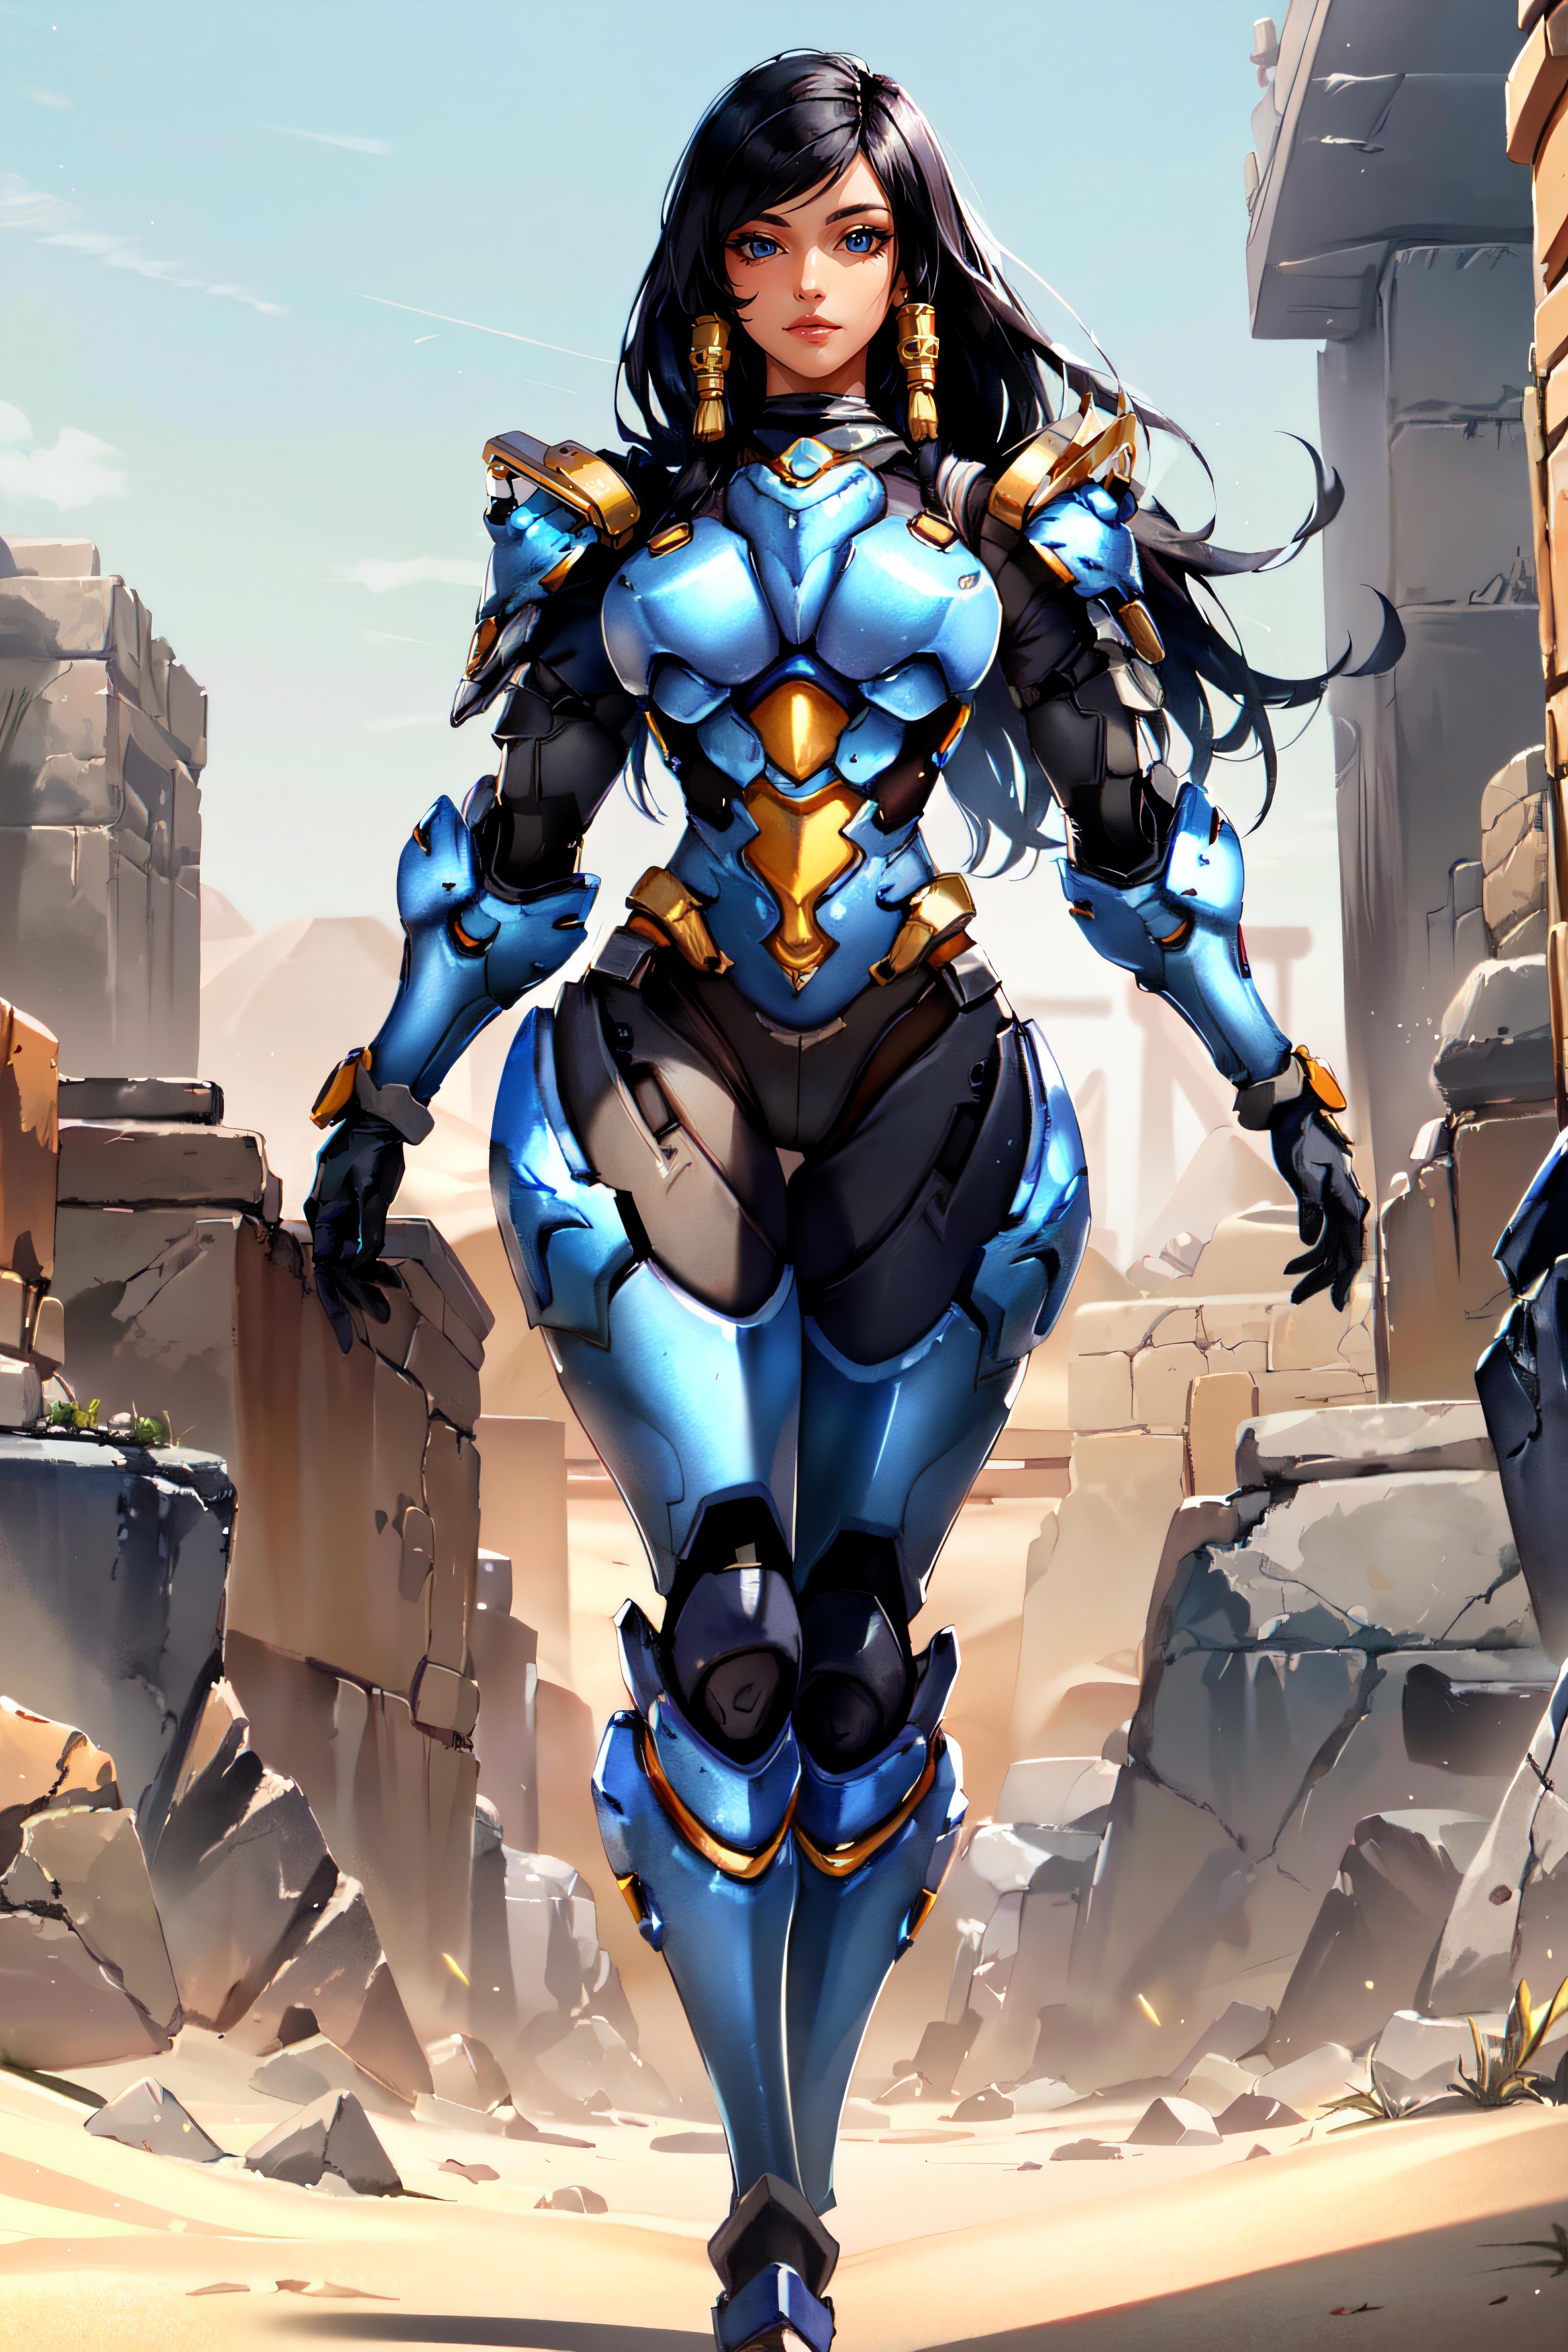 Pharah from Overwatch image by betweenspectrums